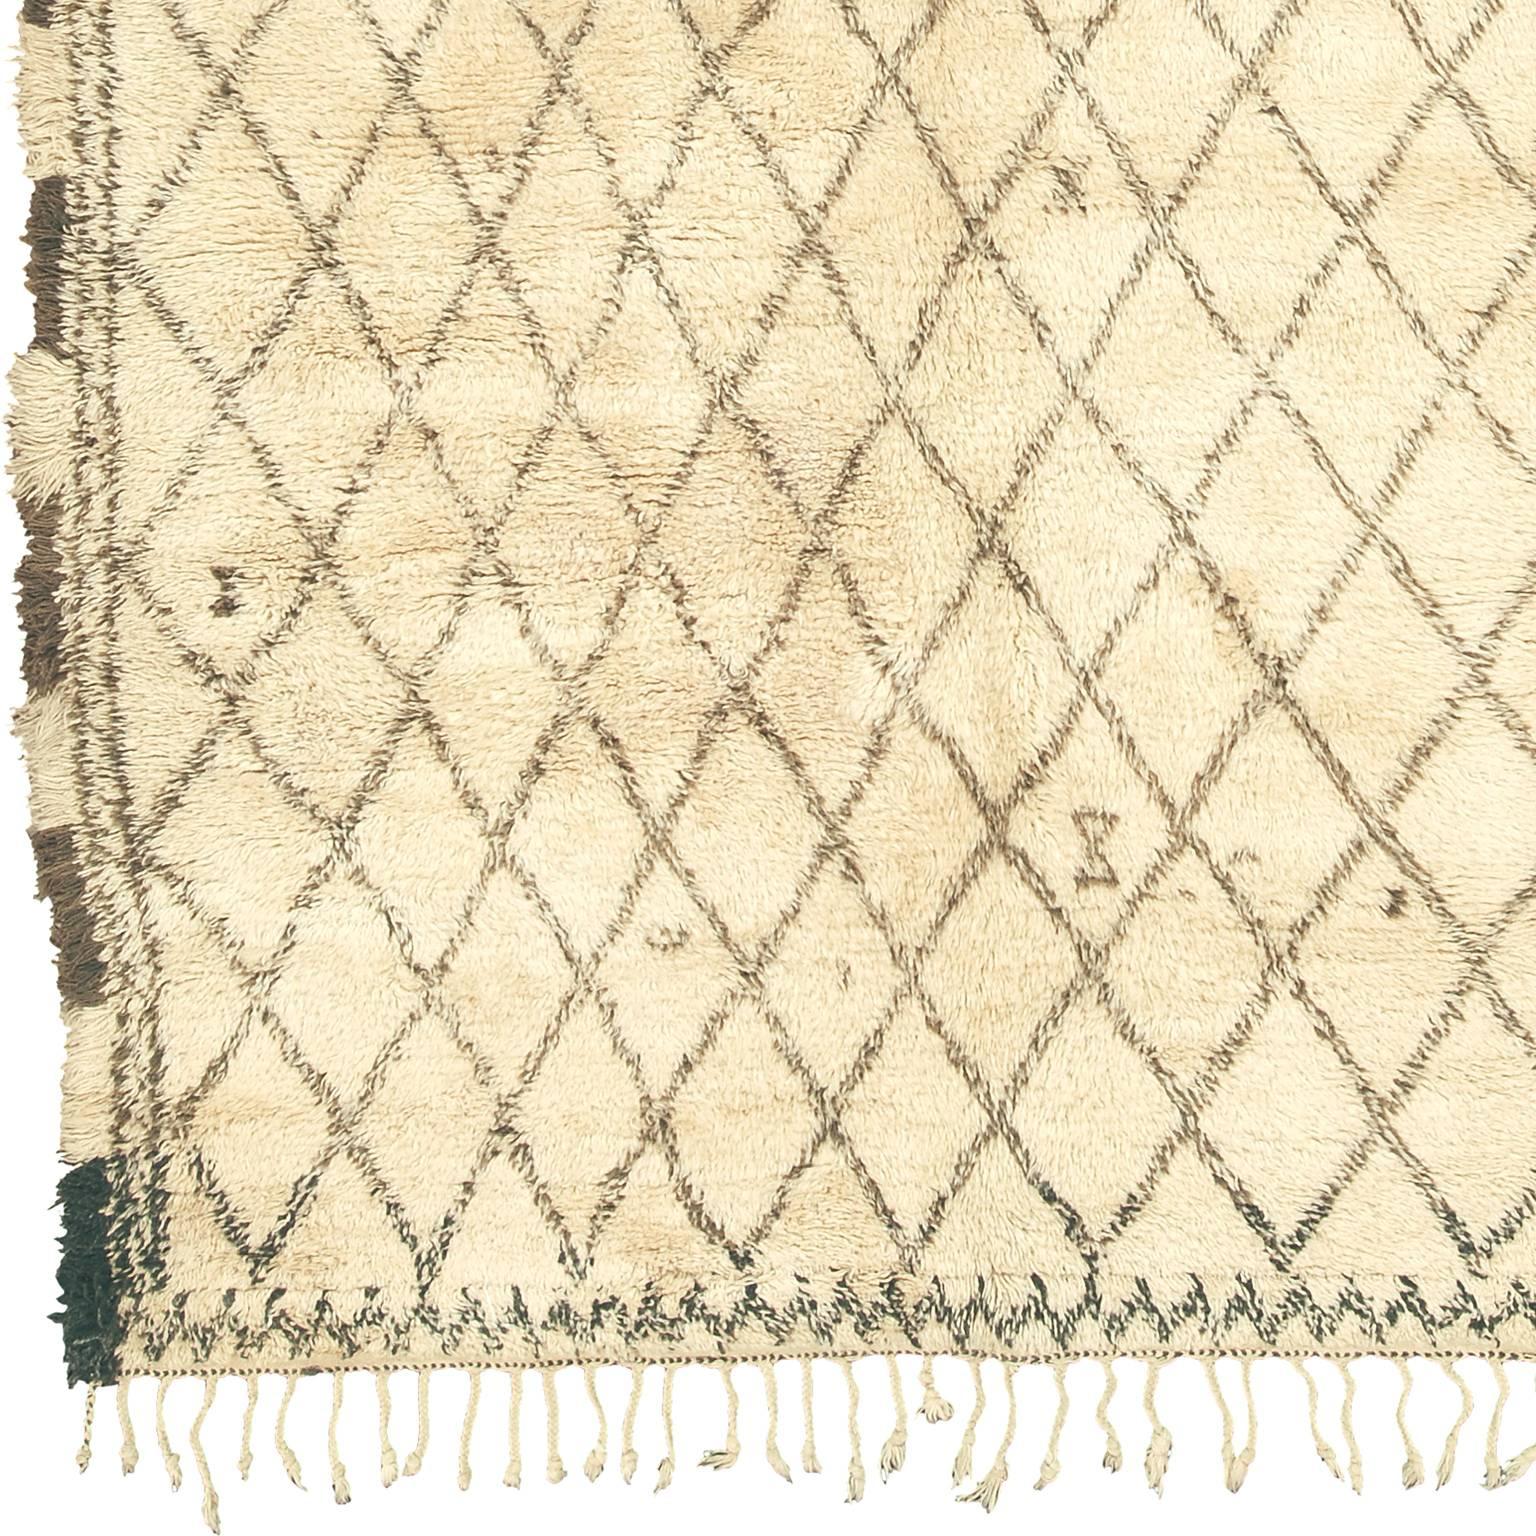 Mid-20th century Moroccan Beni Ourain rug
Morocco, circa mid-20th century
Handwoven